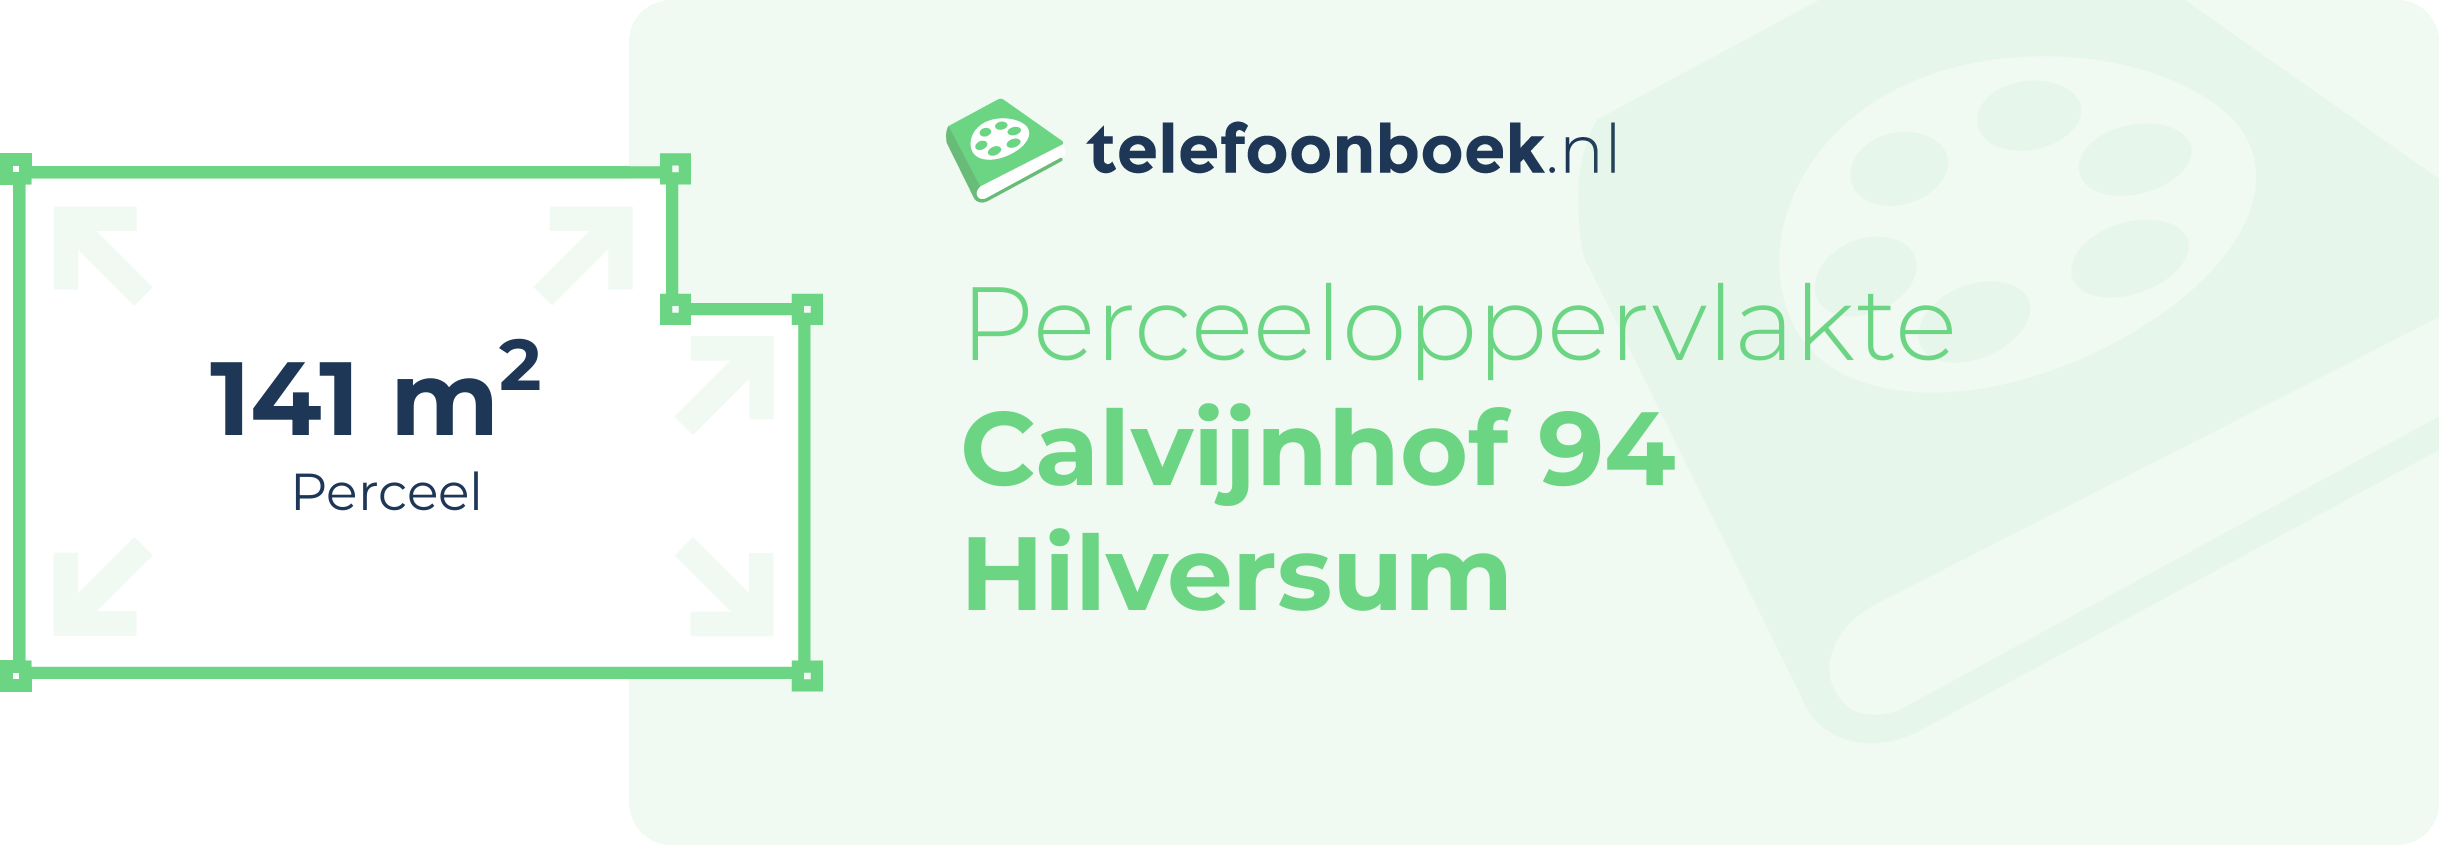 Perceeloppervlakte Calvijnhof 94 Hilversum